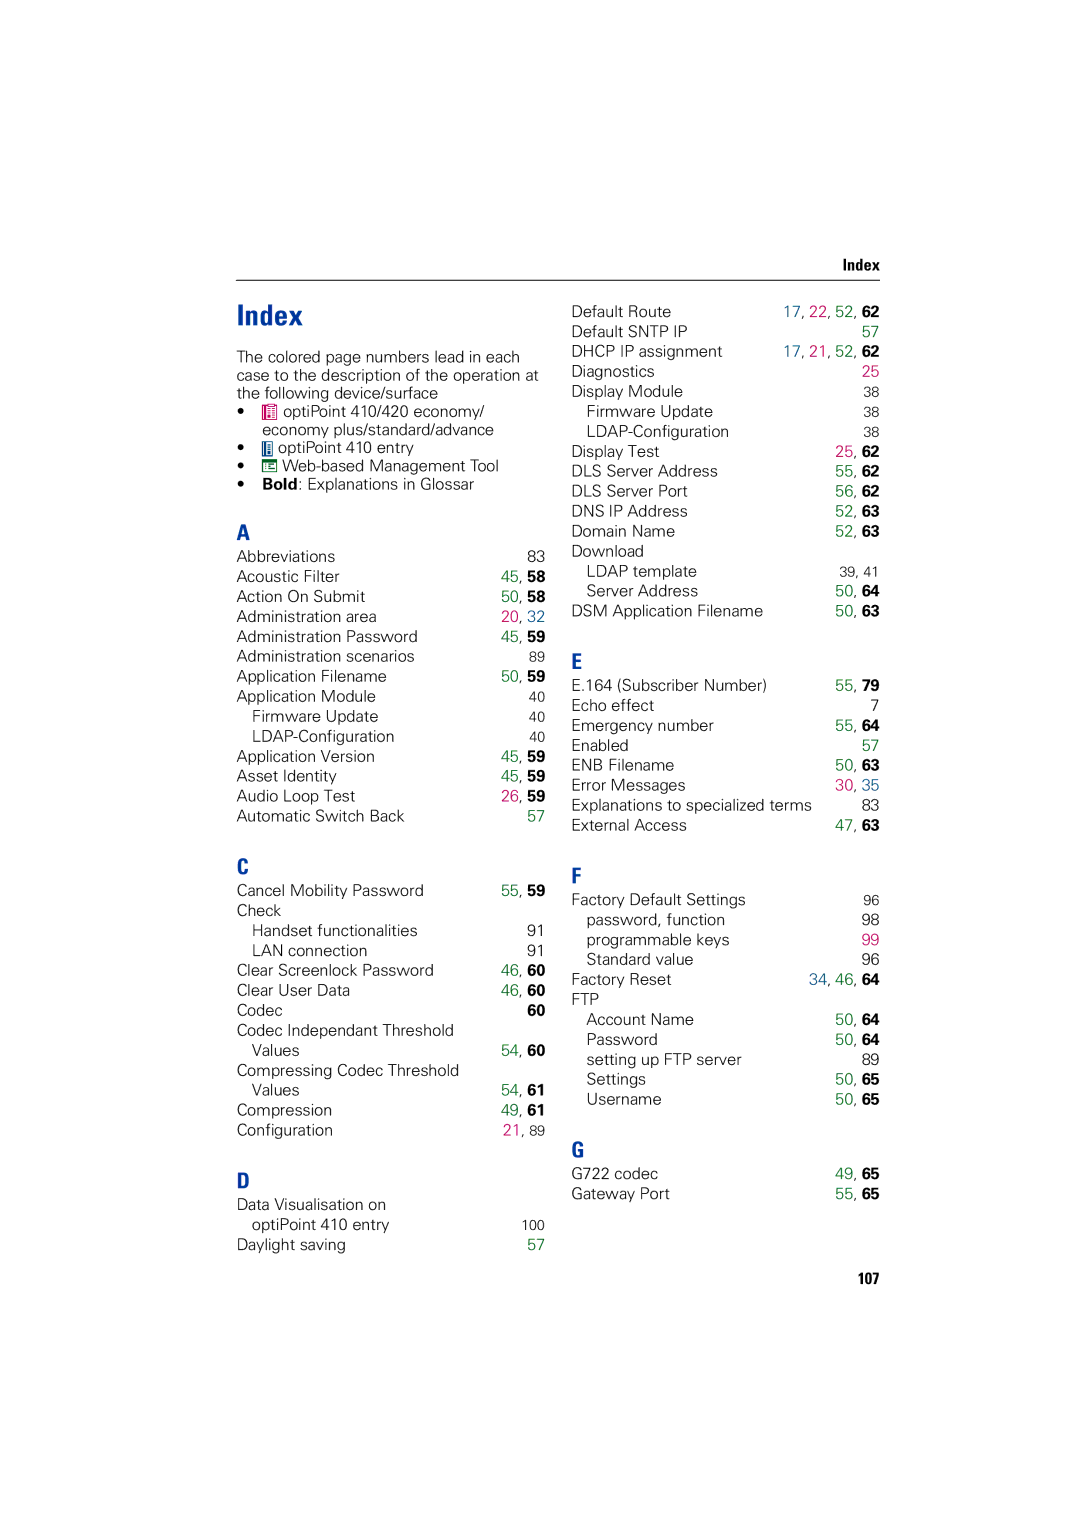 Siemens 2000 manual Index, 107 